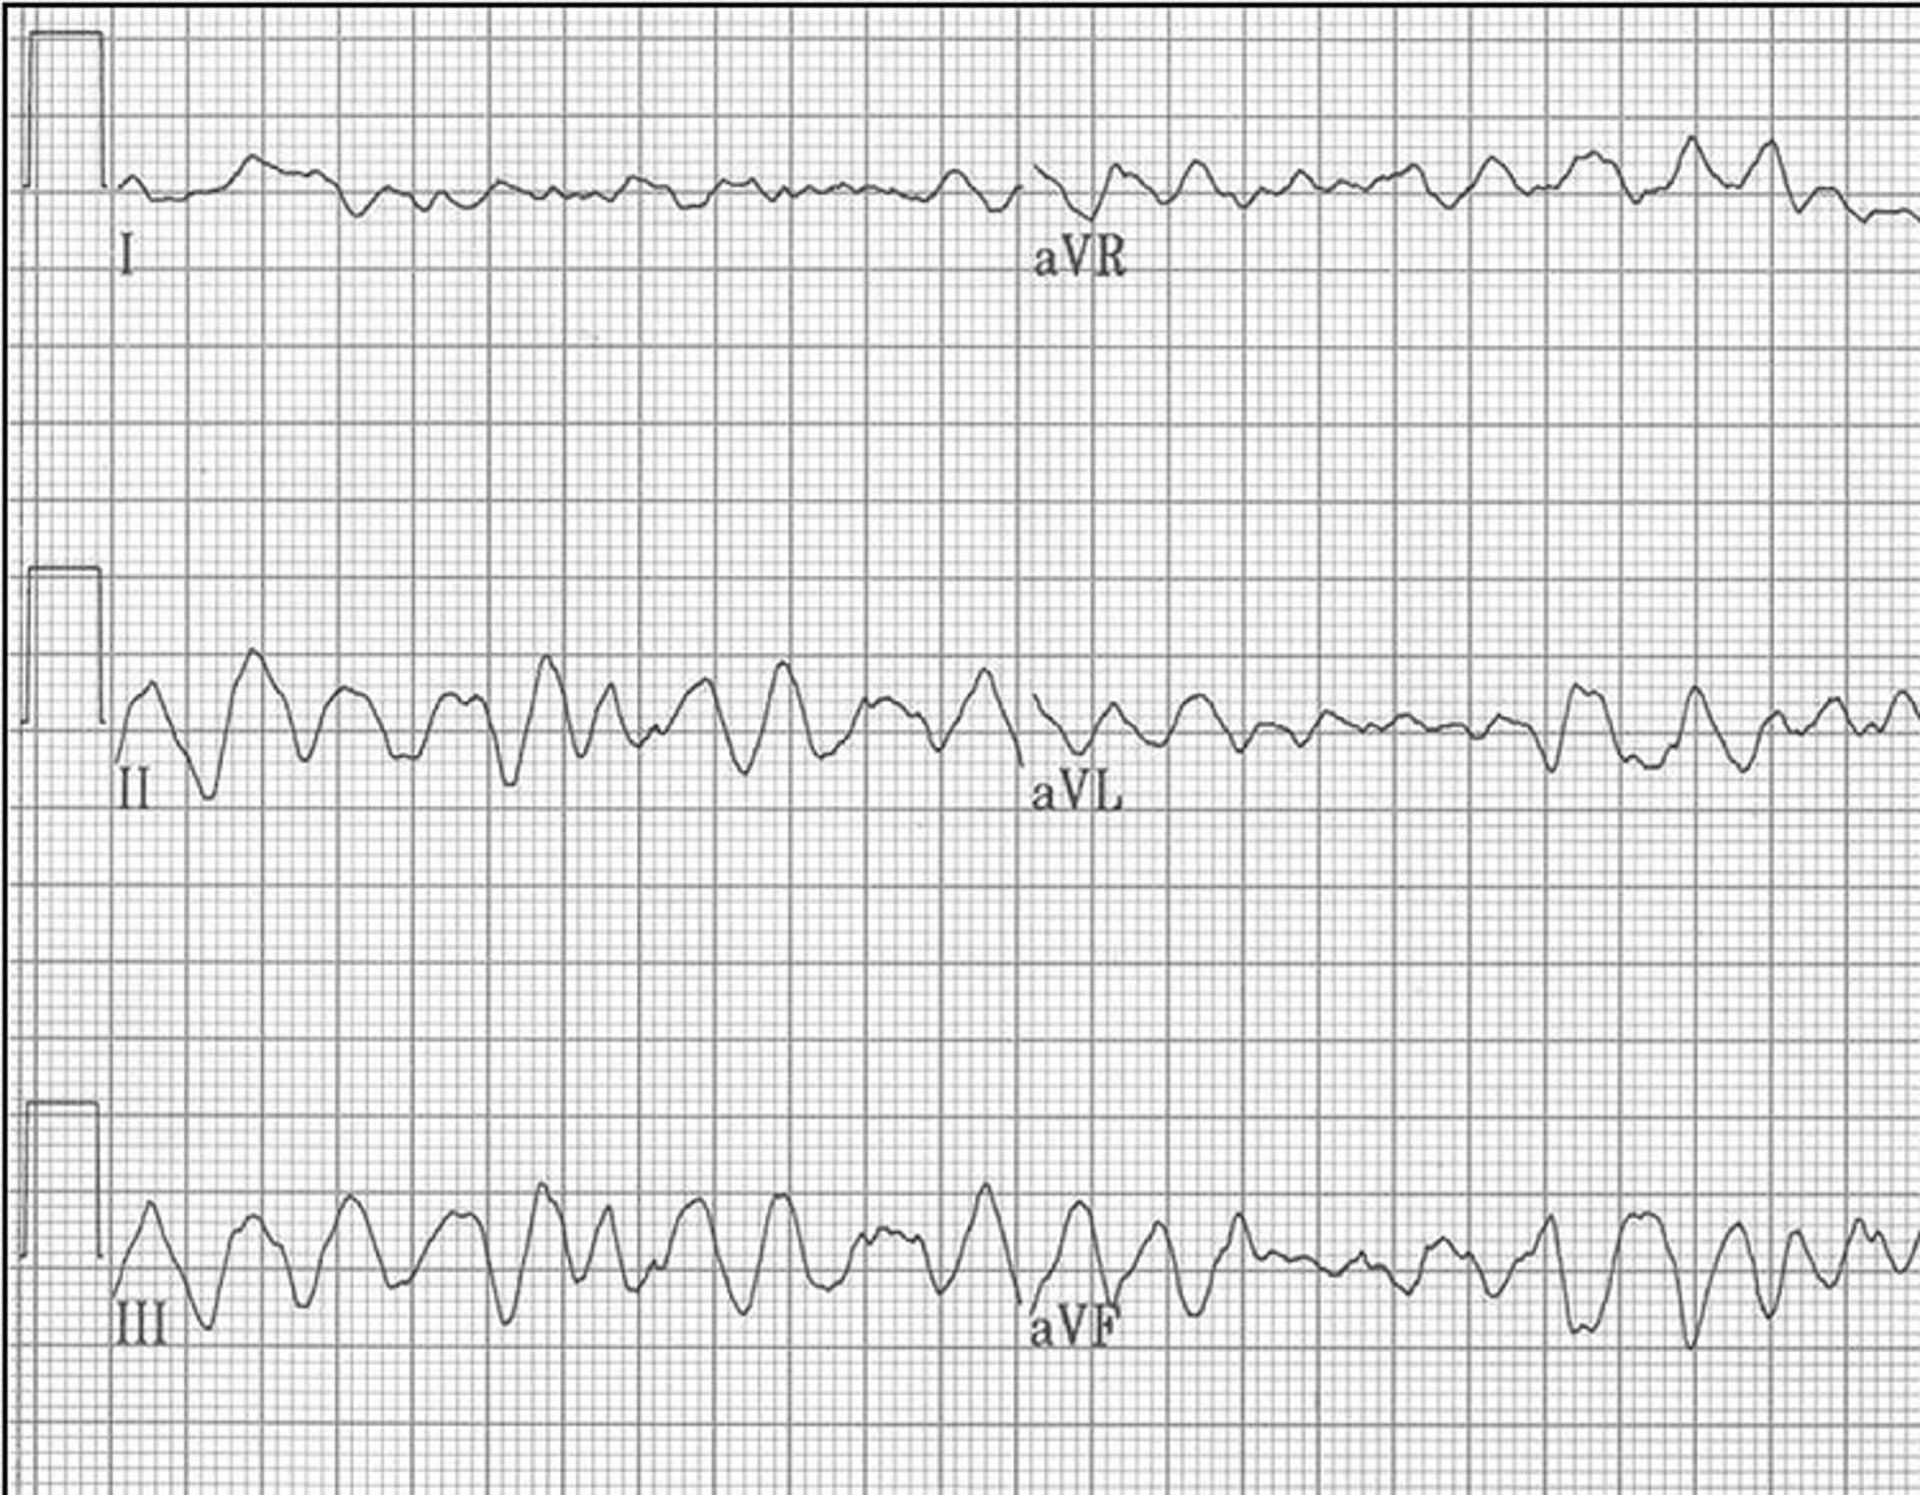 ECG, ventricular fibrillation, dog